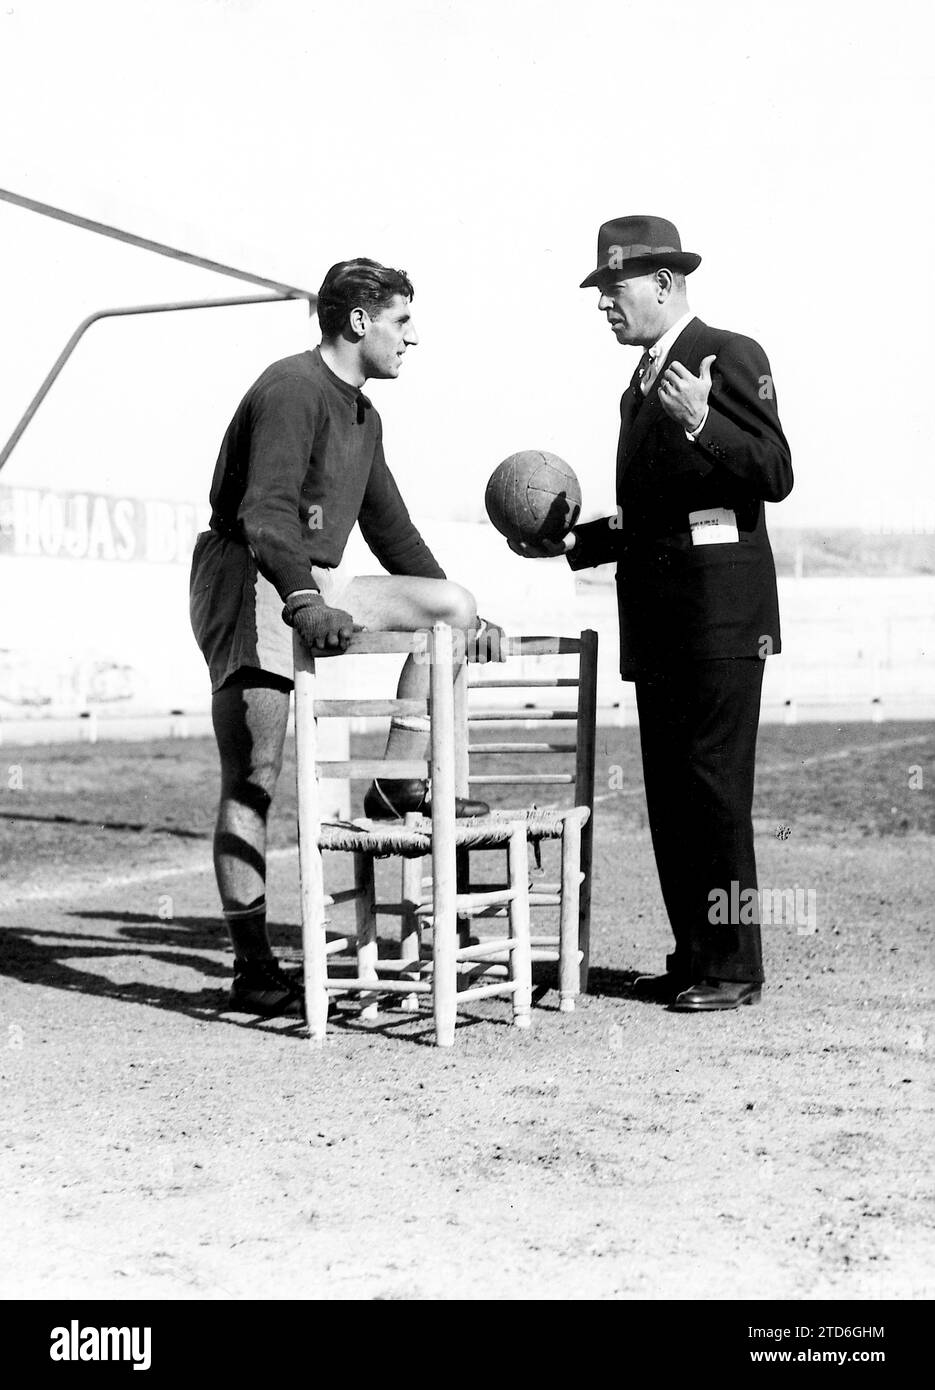 Ricardo Zamora instructs Serra, the new goalkeeper under his command, at Atlético Aviación. (1940-1941). Credit: Album / Archivo ABC Stock Photo